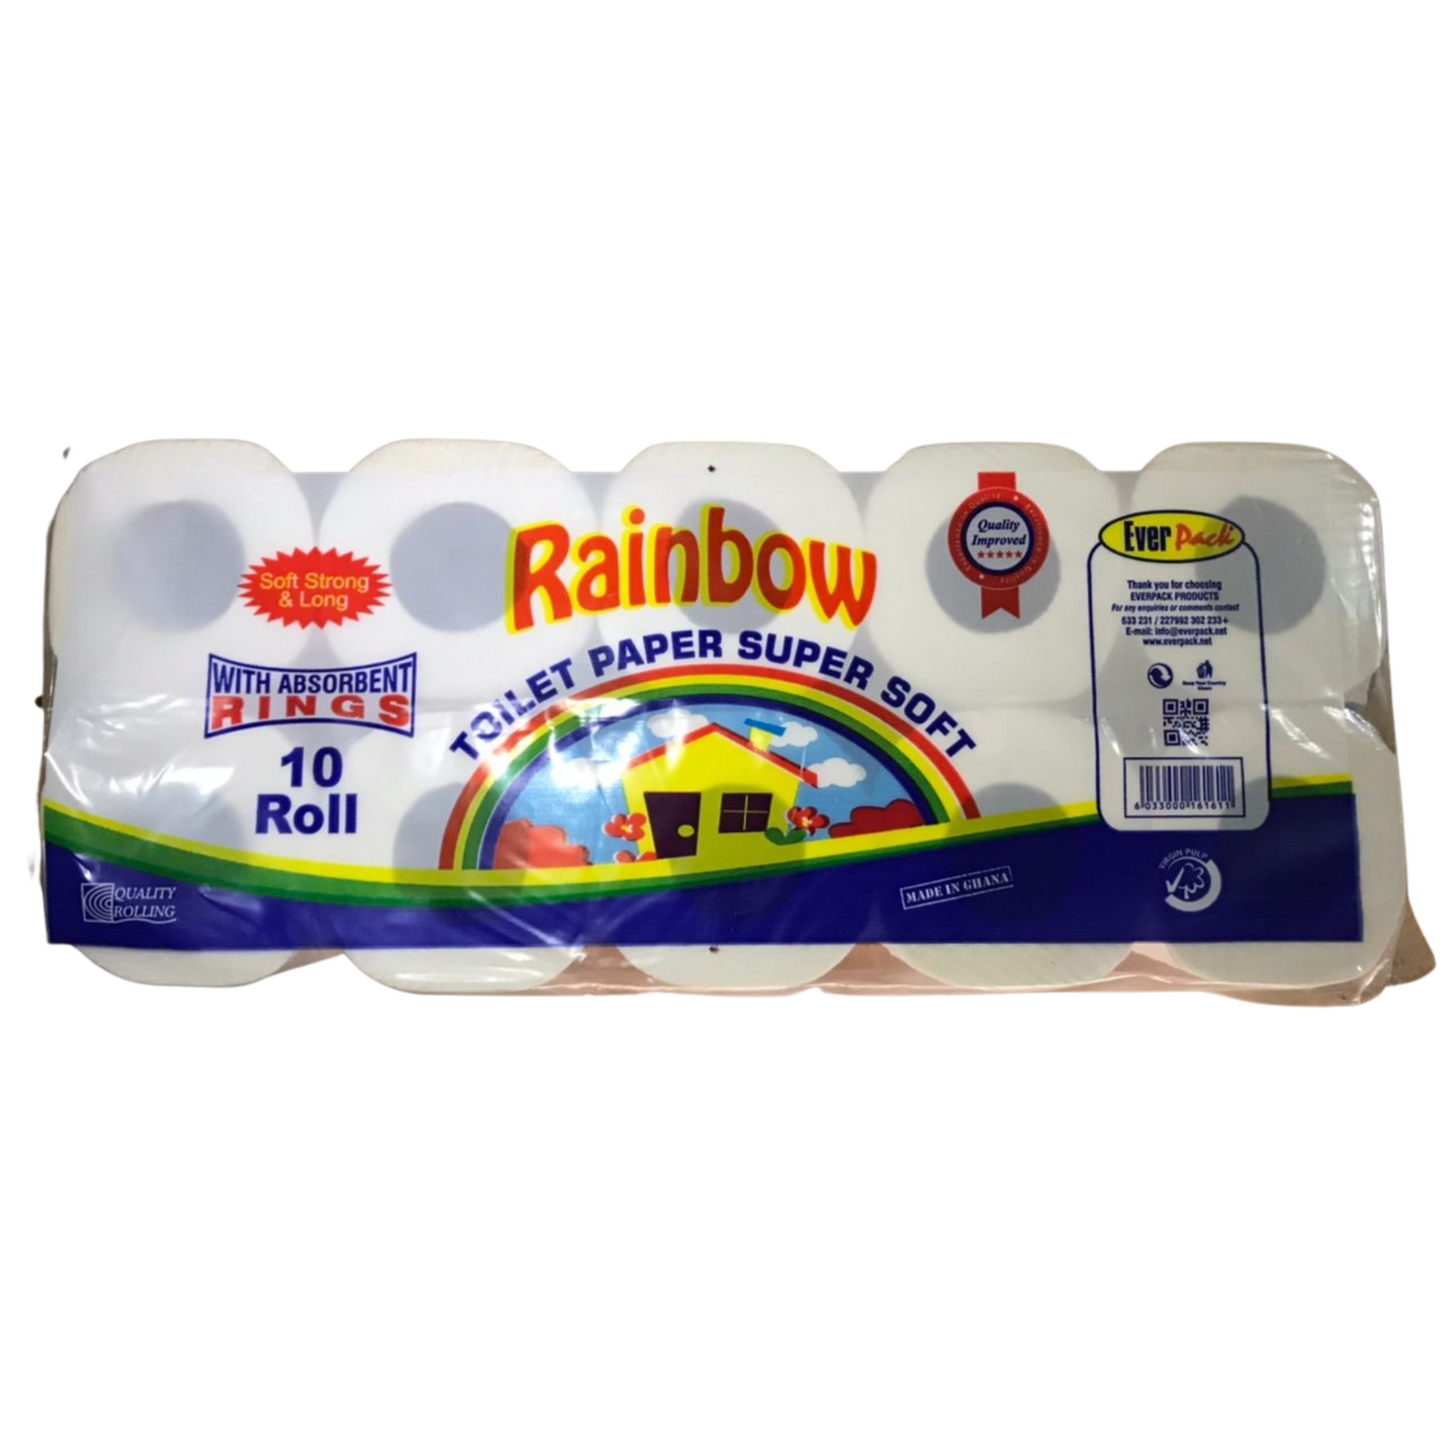 Rainbow toilet paper super soft